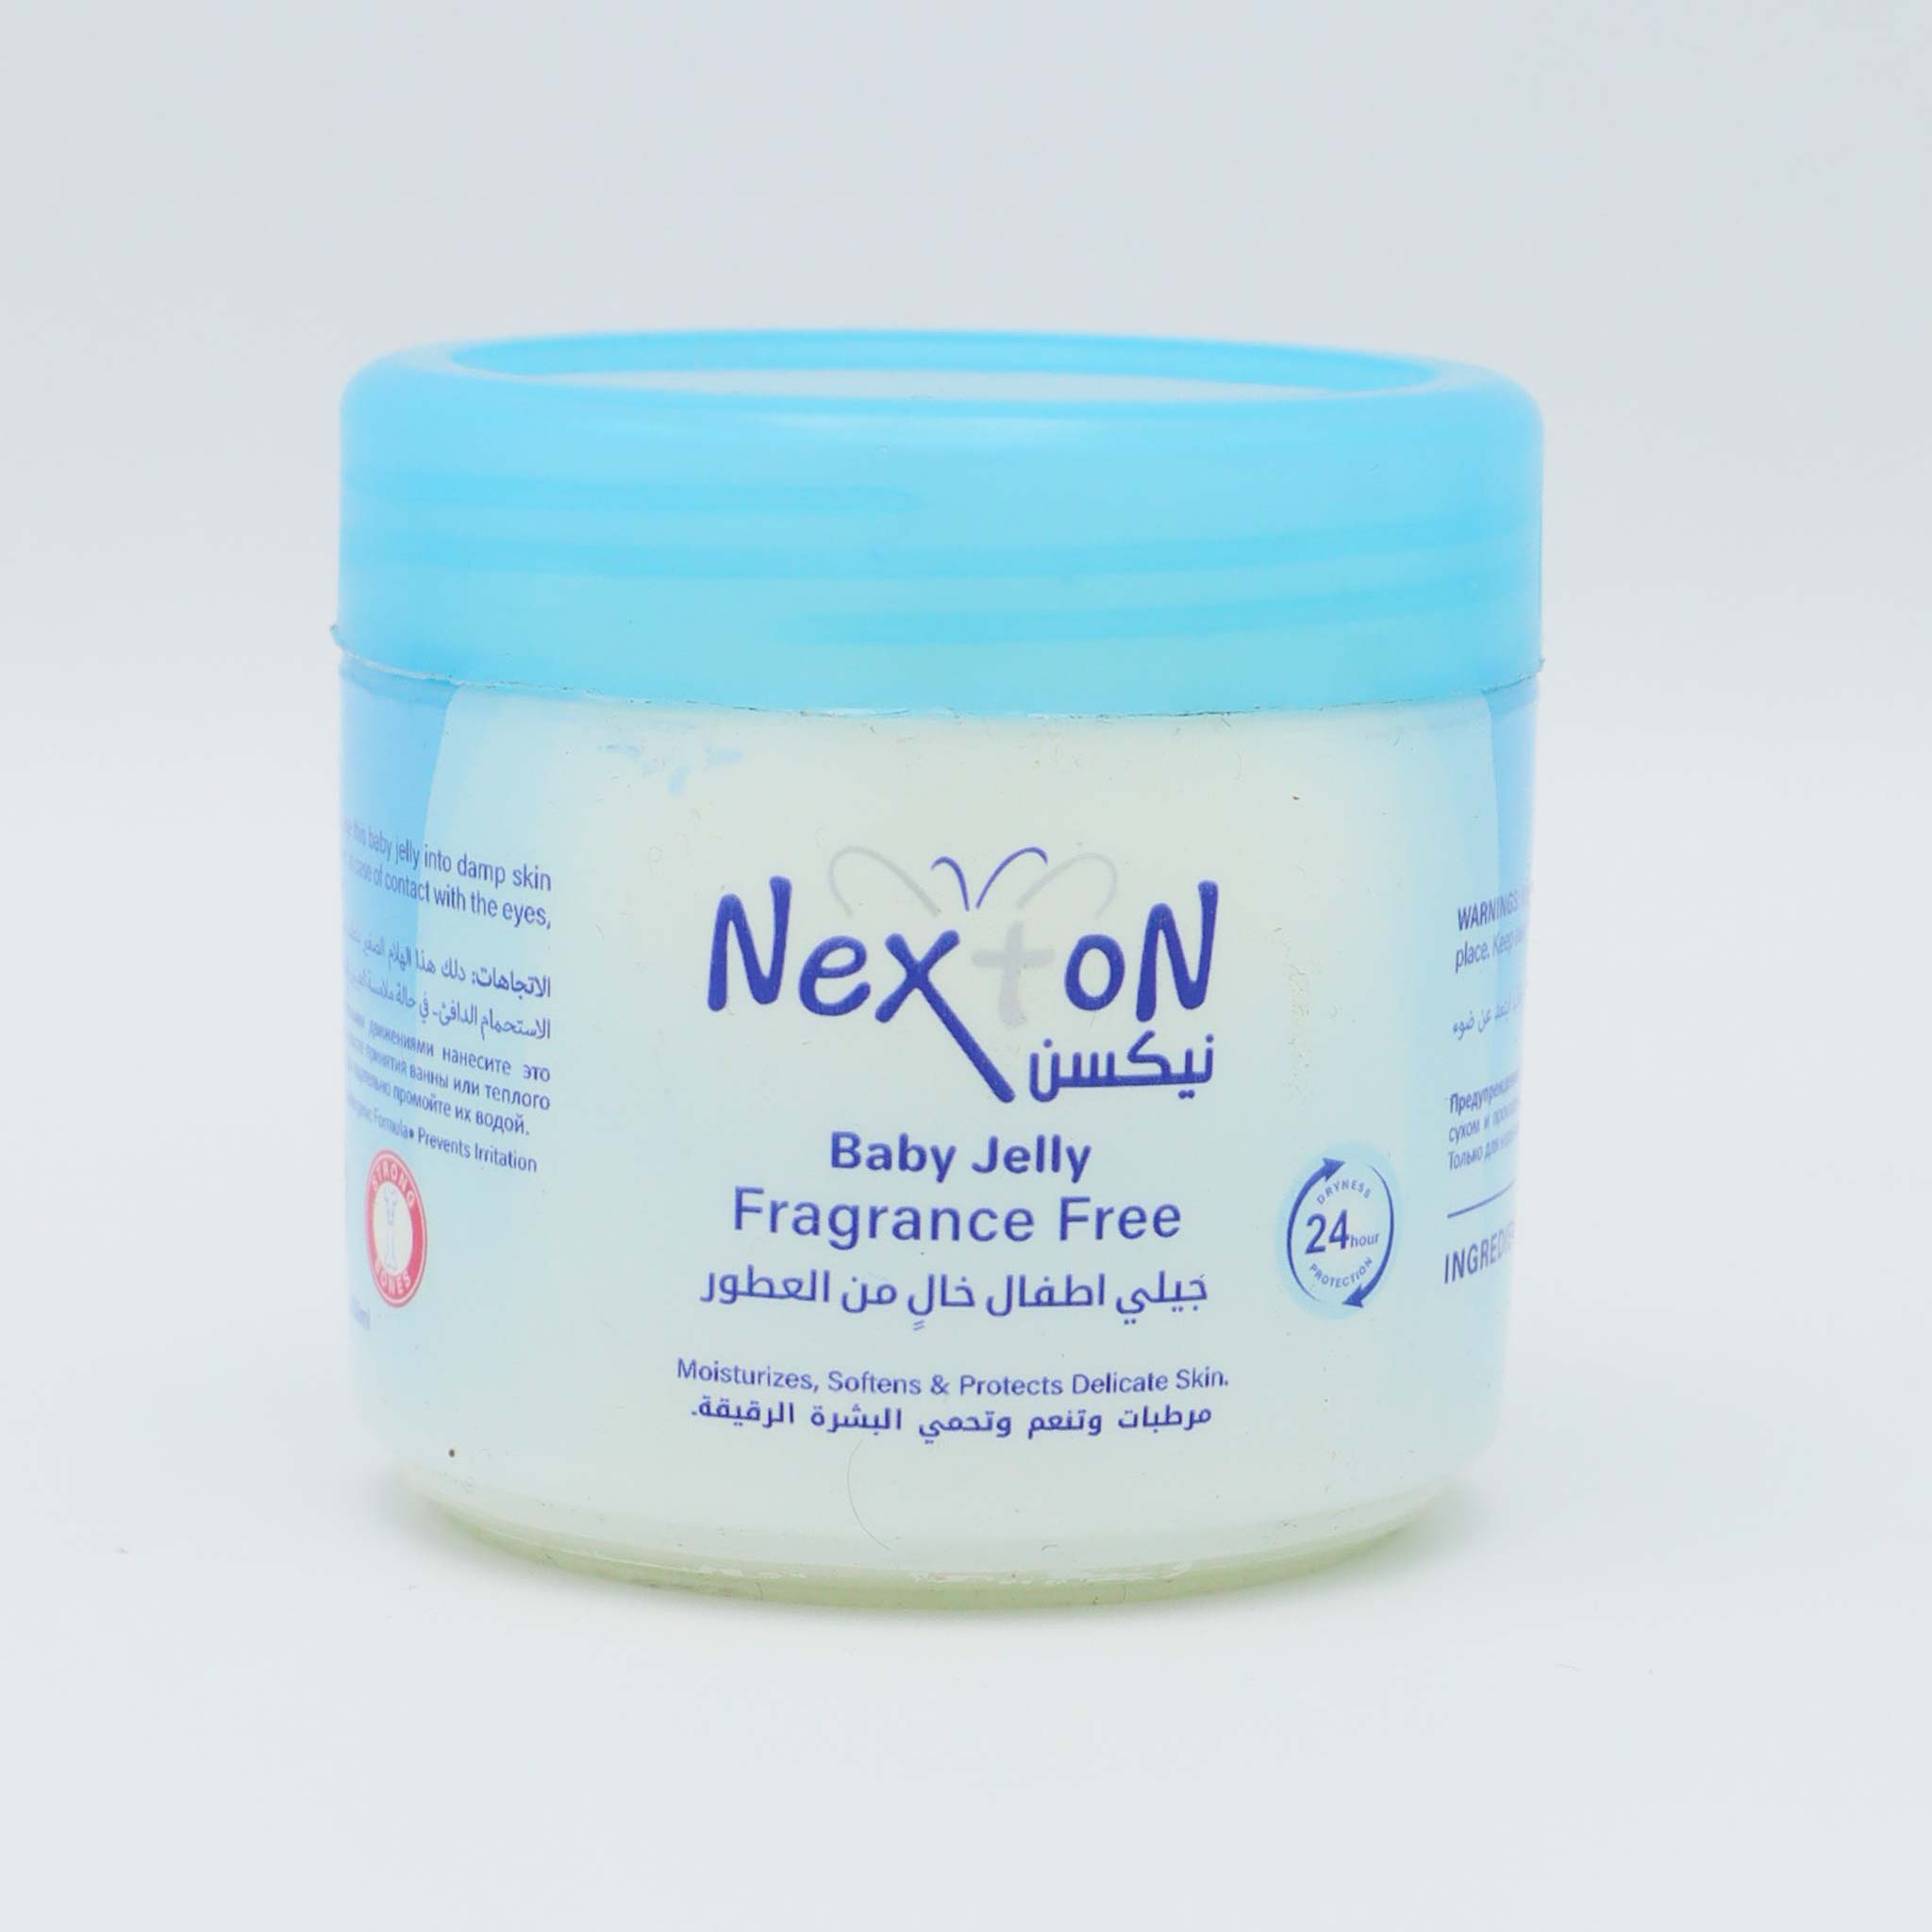 Baby Jelly Fragrance Free 100ml by Nexton